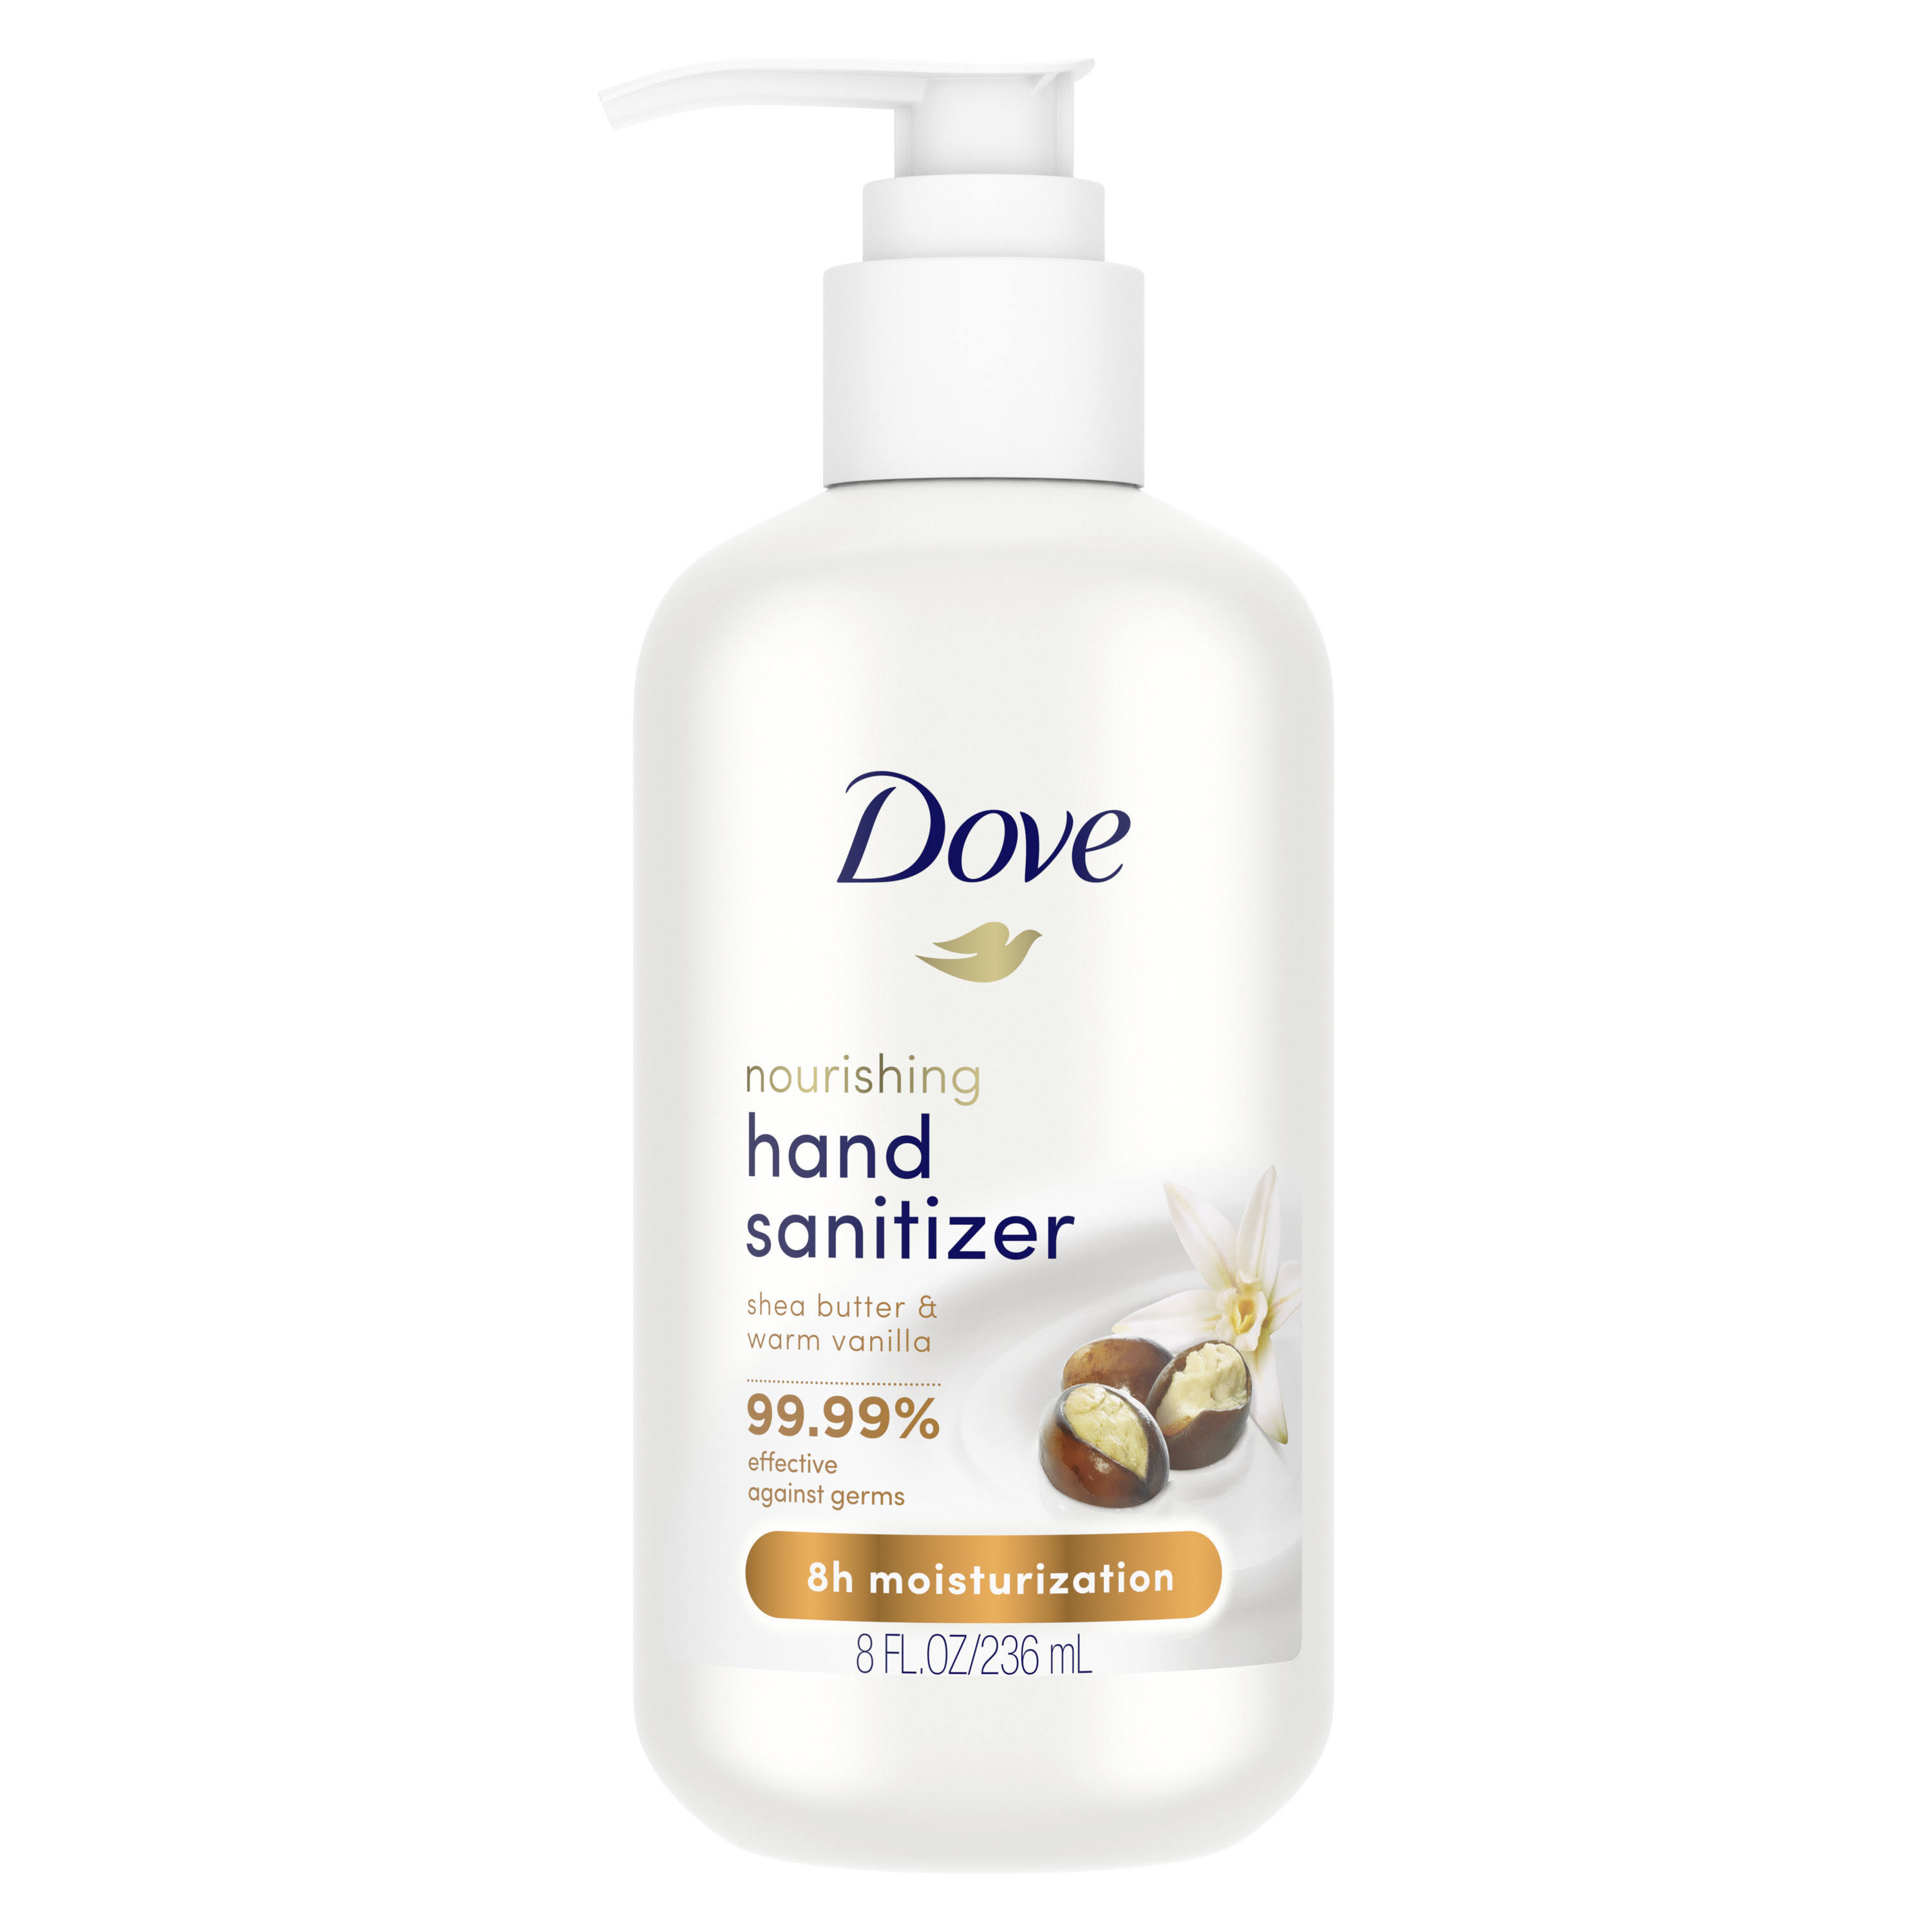 Dove beauty moisturizing & hand sanitizer shea butter, 8 oz